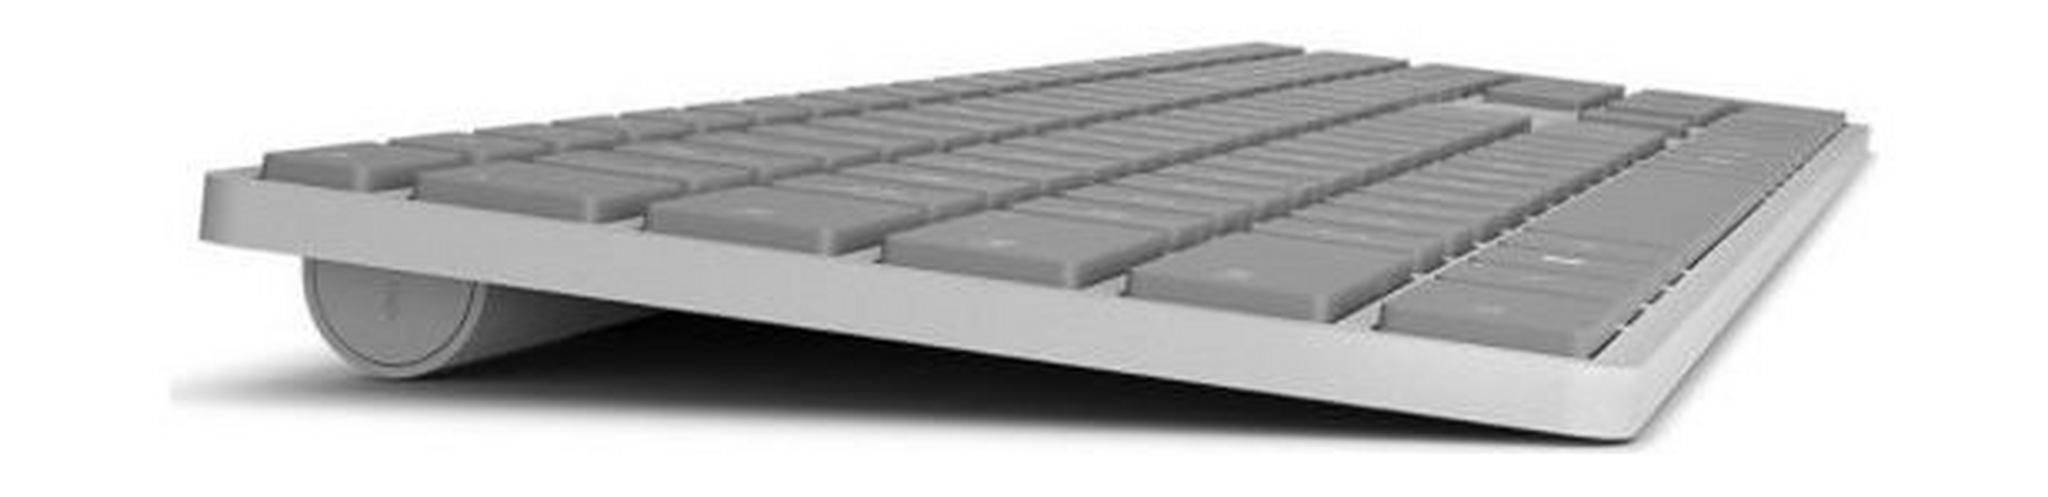 Microsoft Surface Bluetooth Keyboard - WS200022